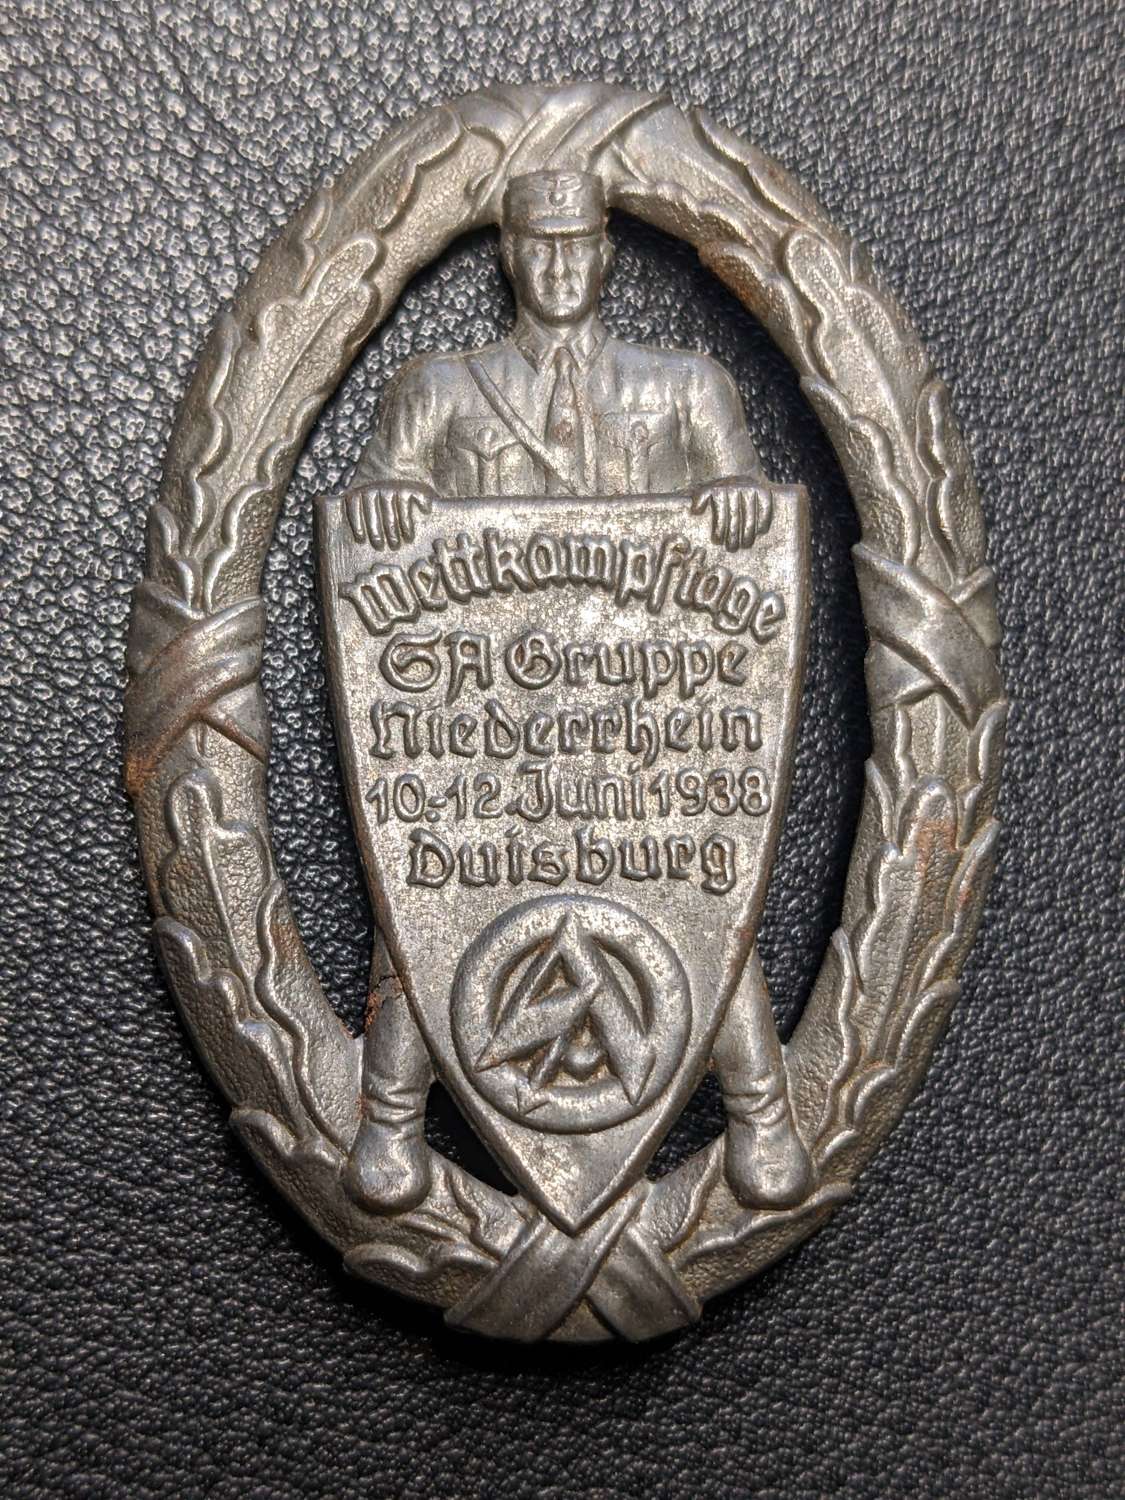 SA-Gruppe The Lower Rhine region or Niederrhein Sports Badge 10th 12th June 1938